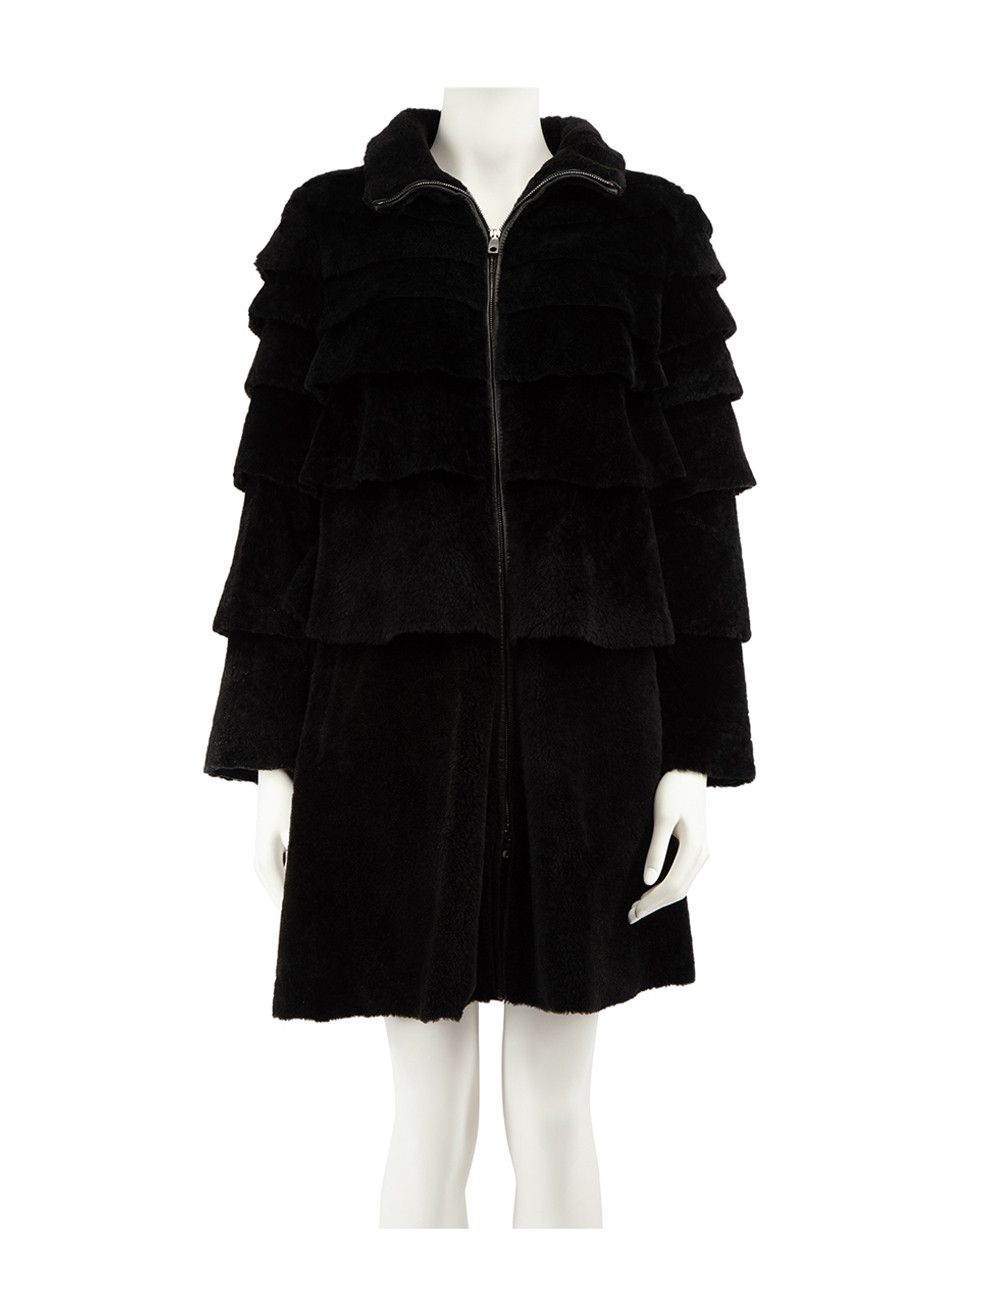 Emporio Armani Black Tiered Shearling Coat | Grailed